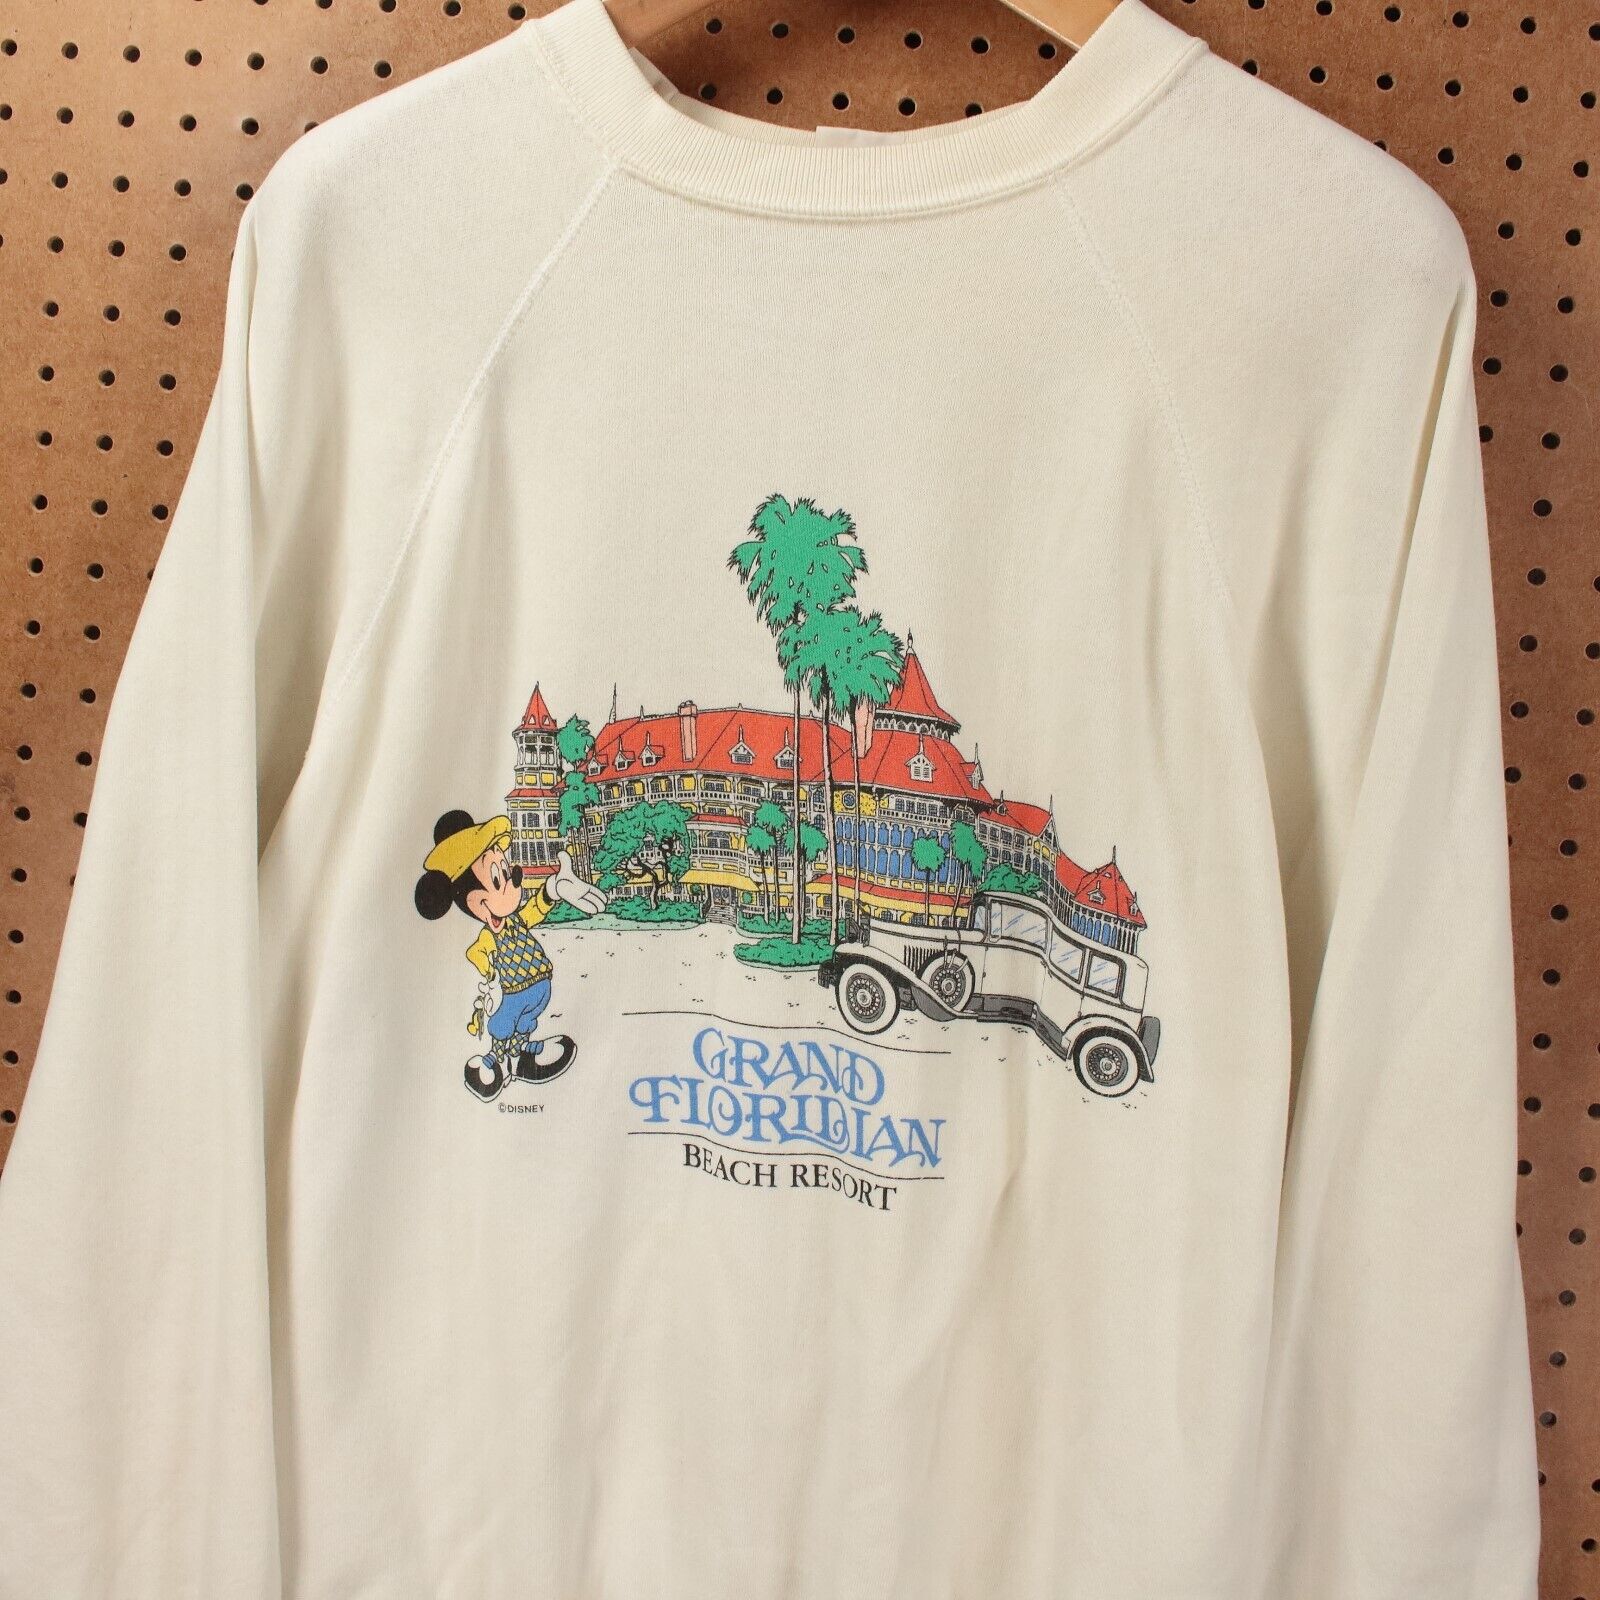 DISNEY Grand Floridian Beach Resort raglan sweatshirt XL vtg 80s 90s usa made